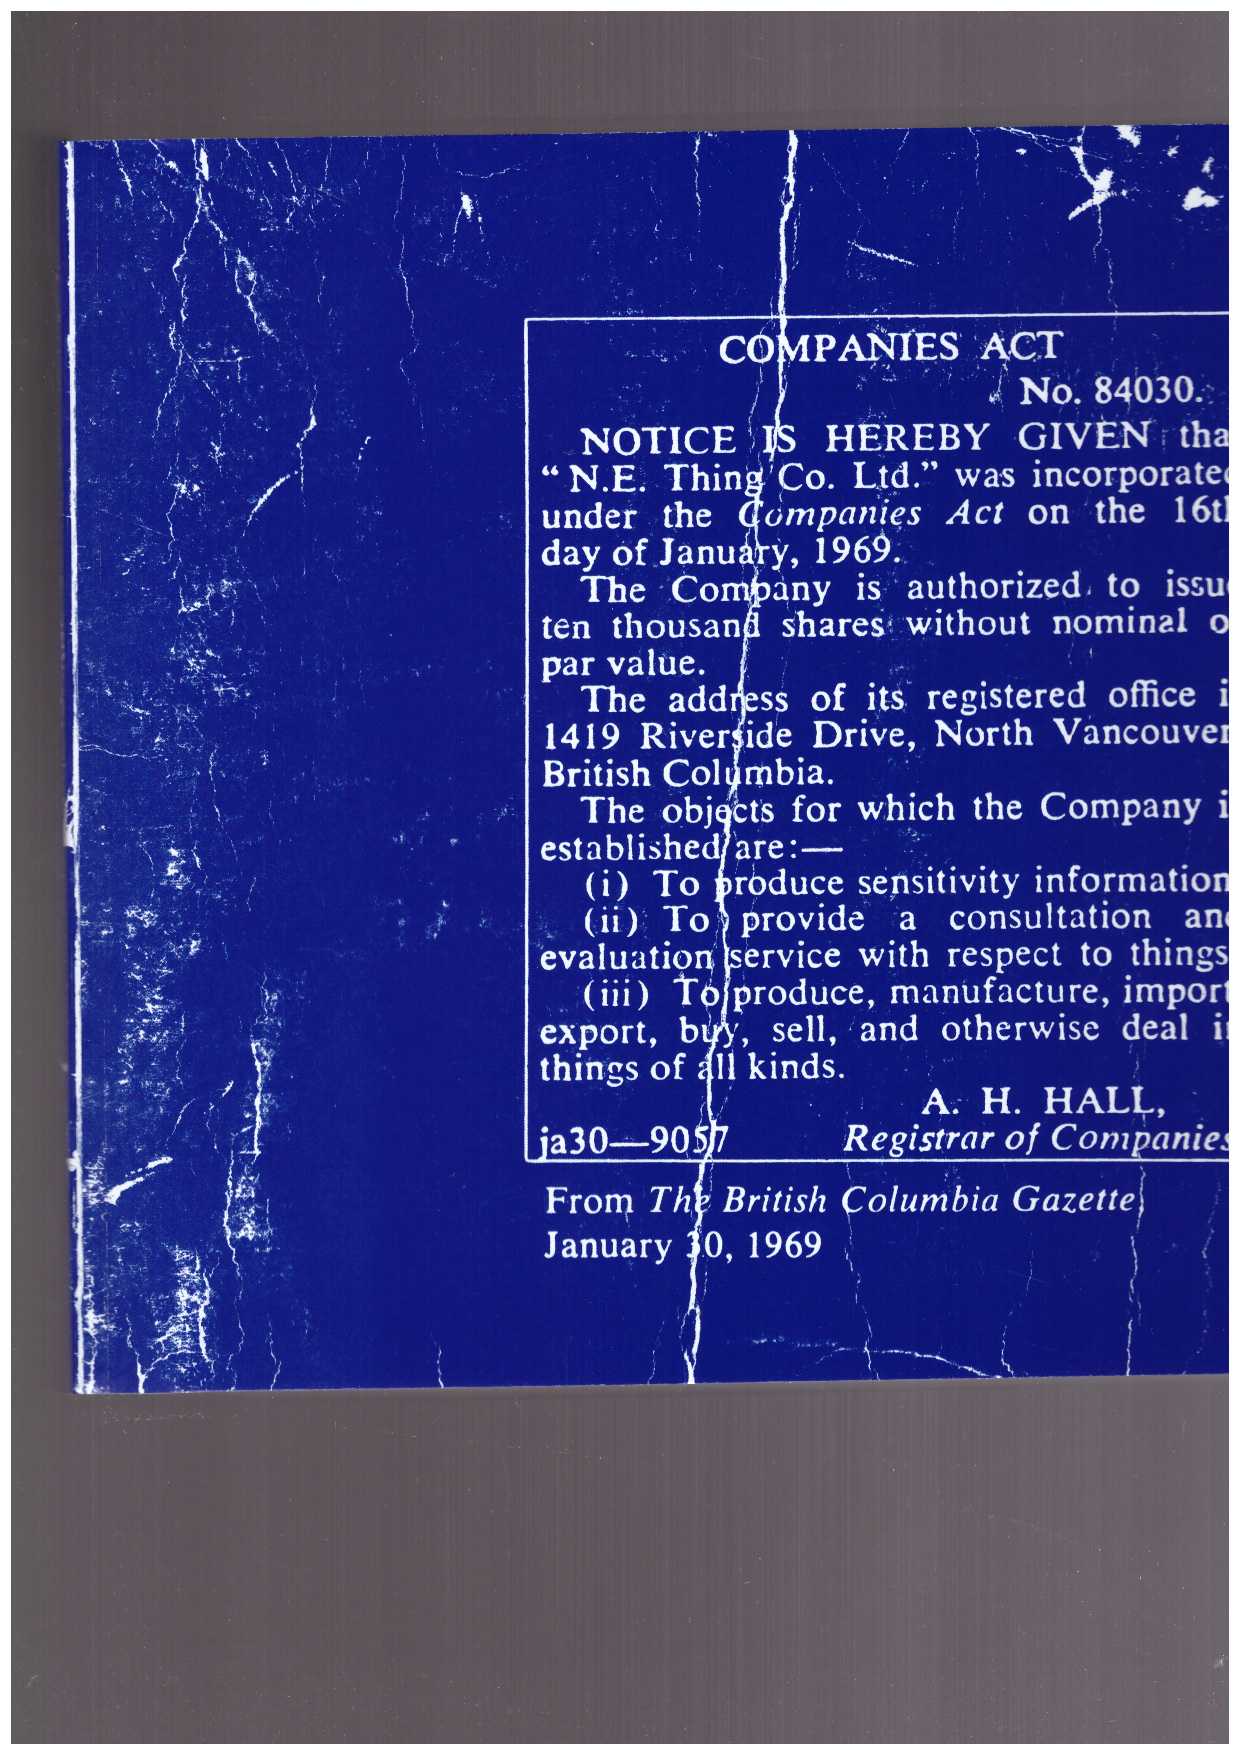 AMMANN, Jean-Christophe - N.E. Thing Co.: Companies Act (Volume 1)